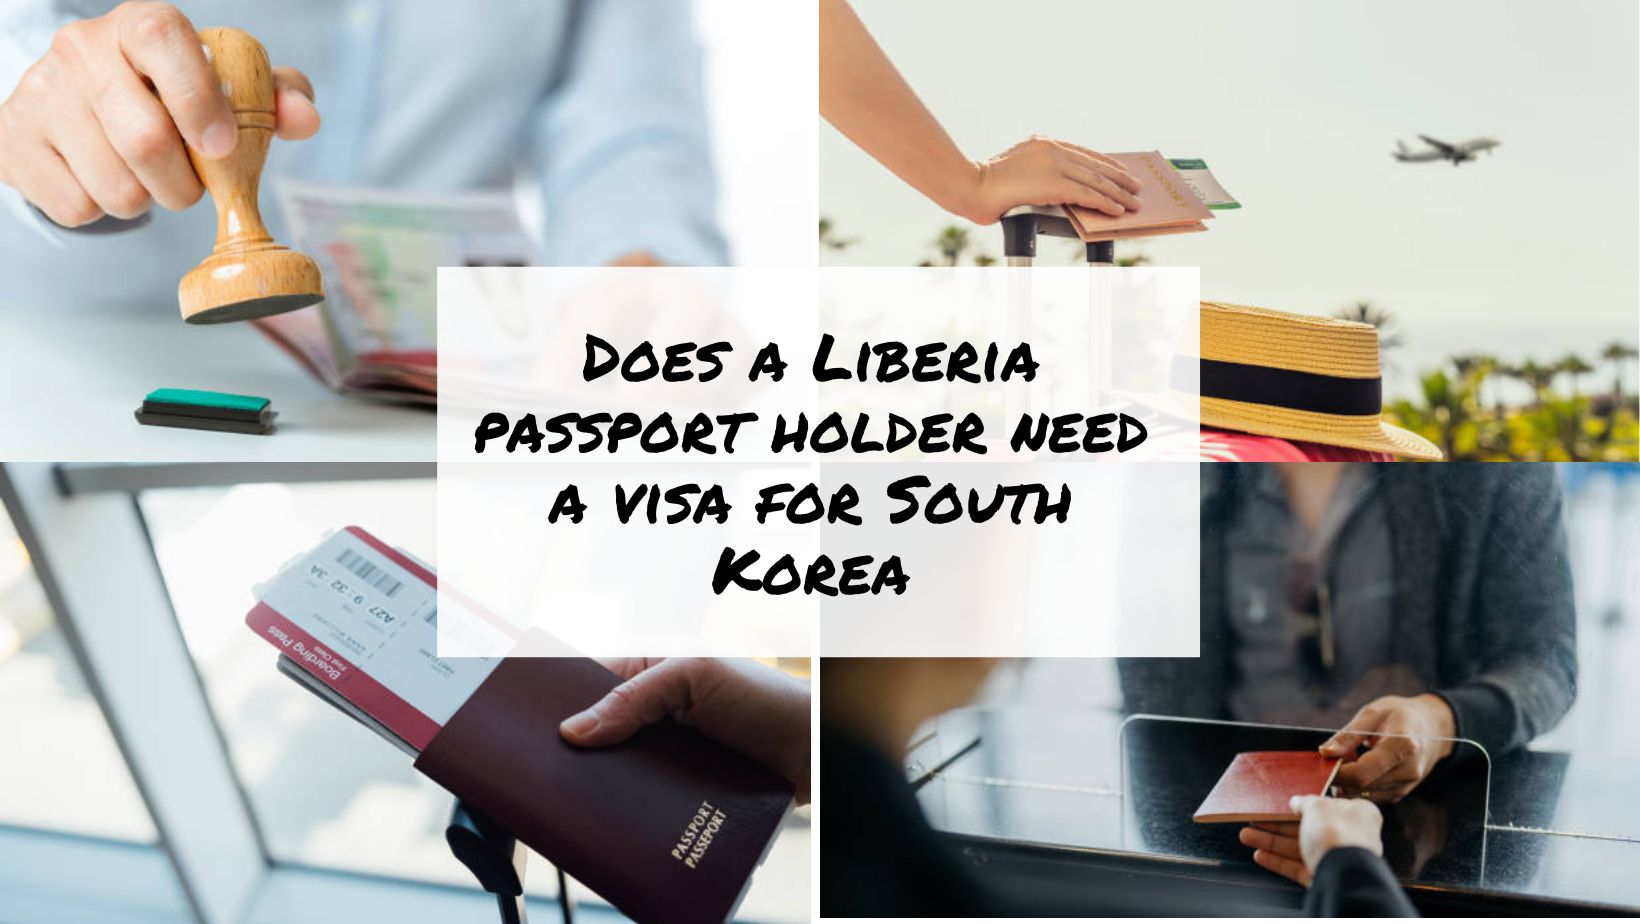 Does a Liberia passport holder need a visa for South Korea